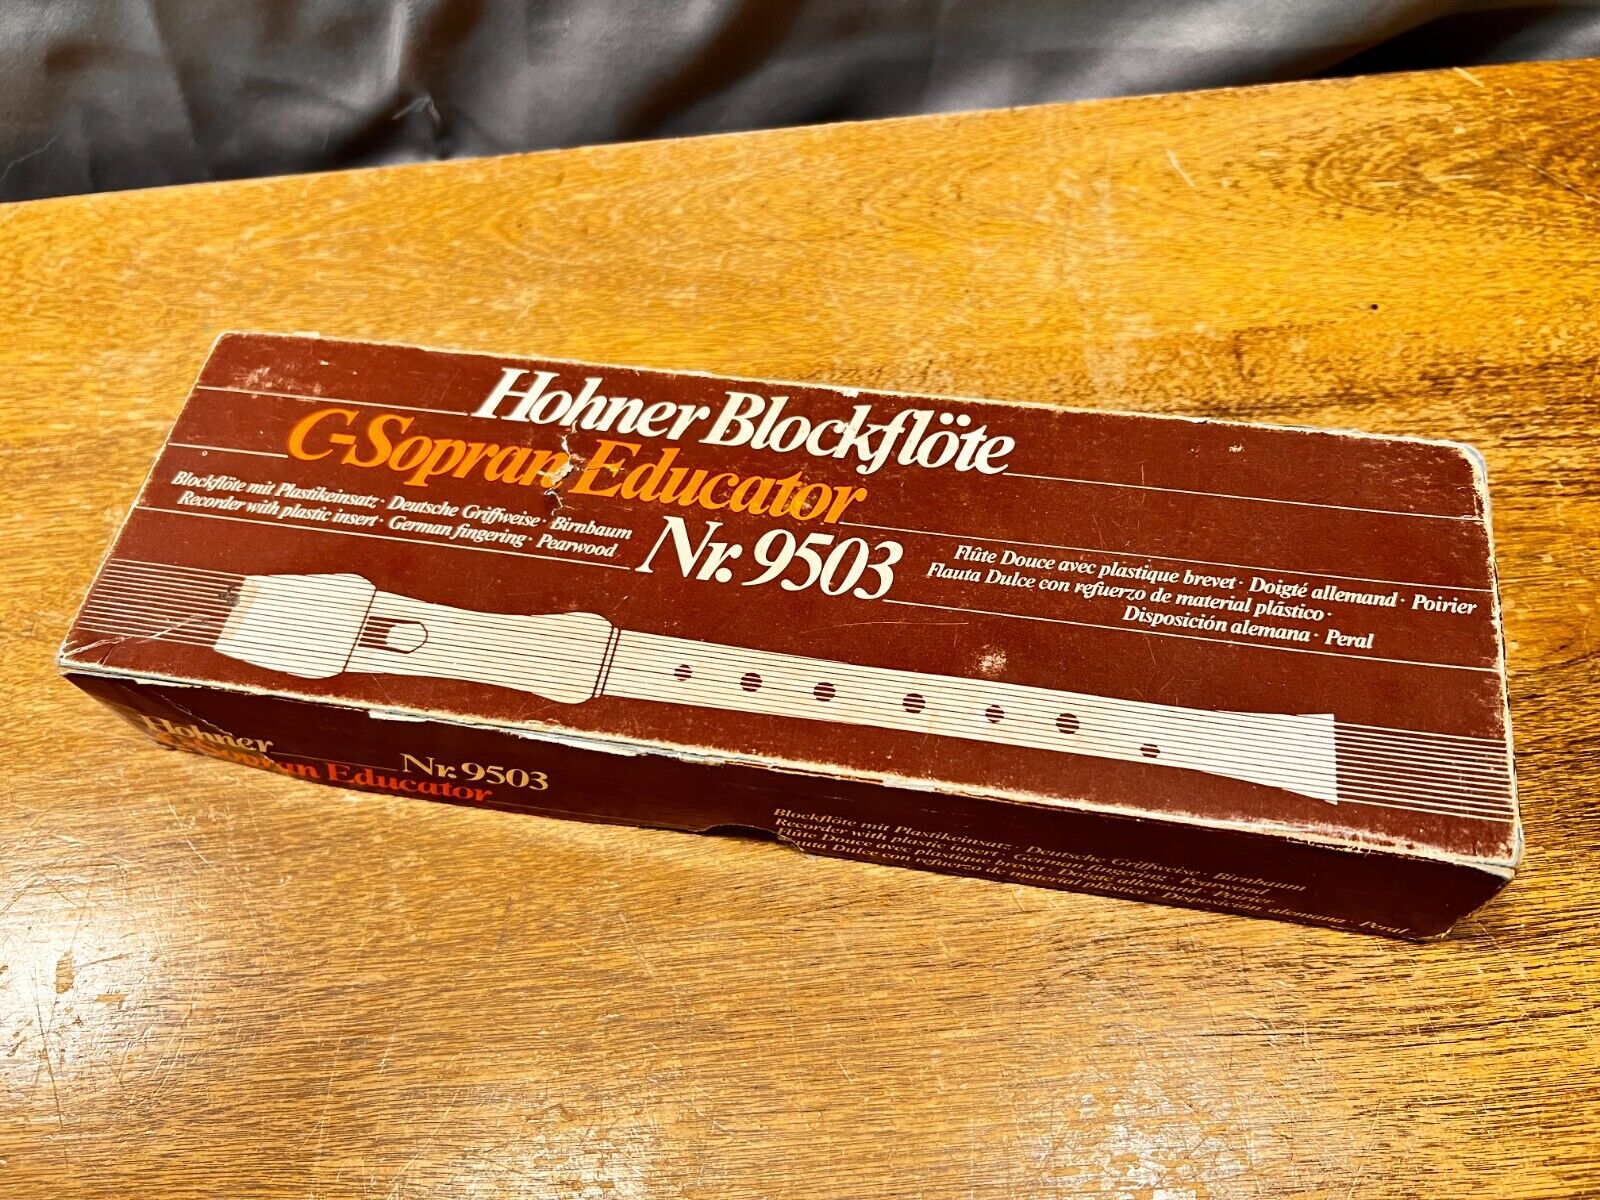 Vintage Hohner Blockflote Wood Recorder C-Soprano Educator No 9503 Original Box